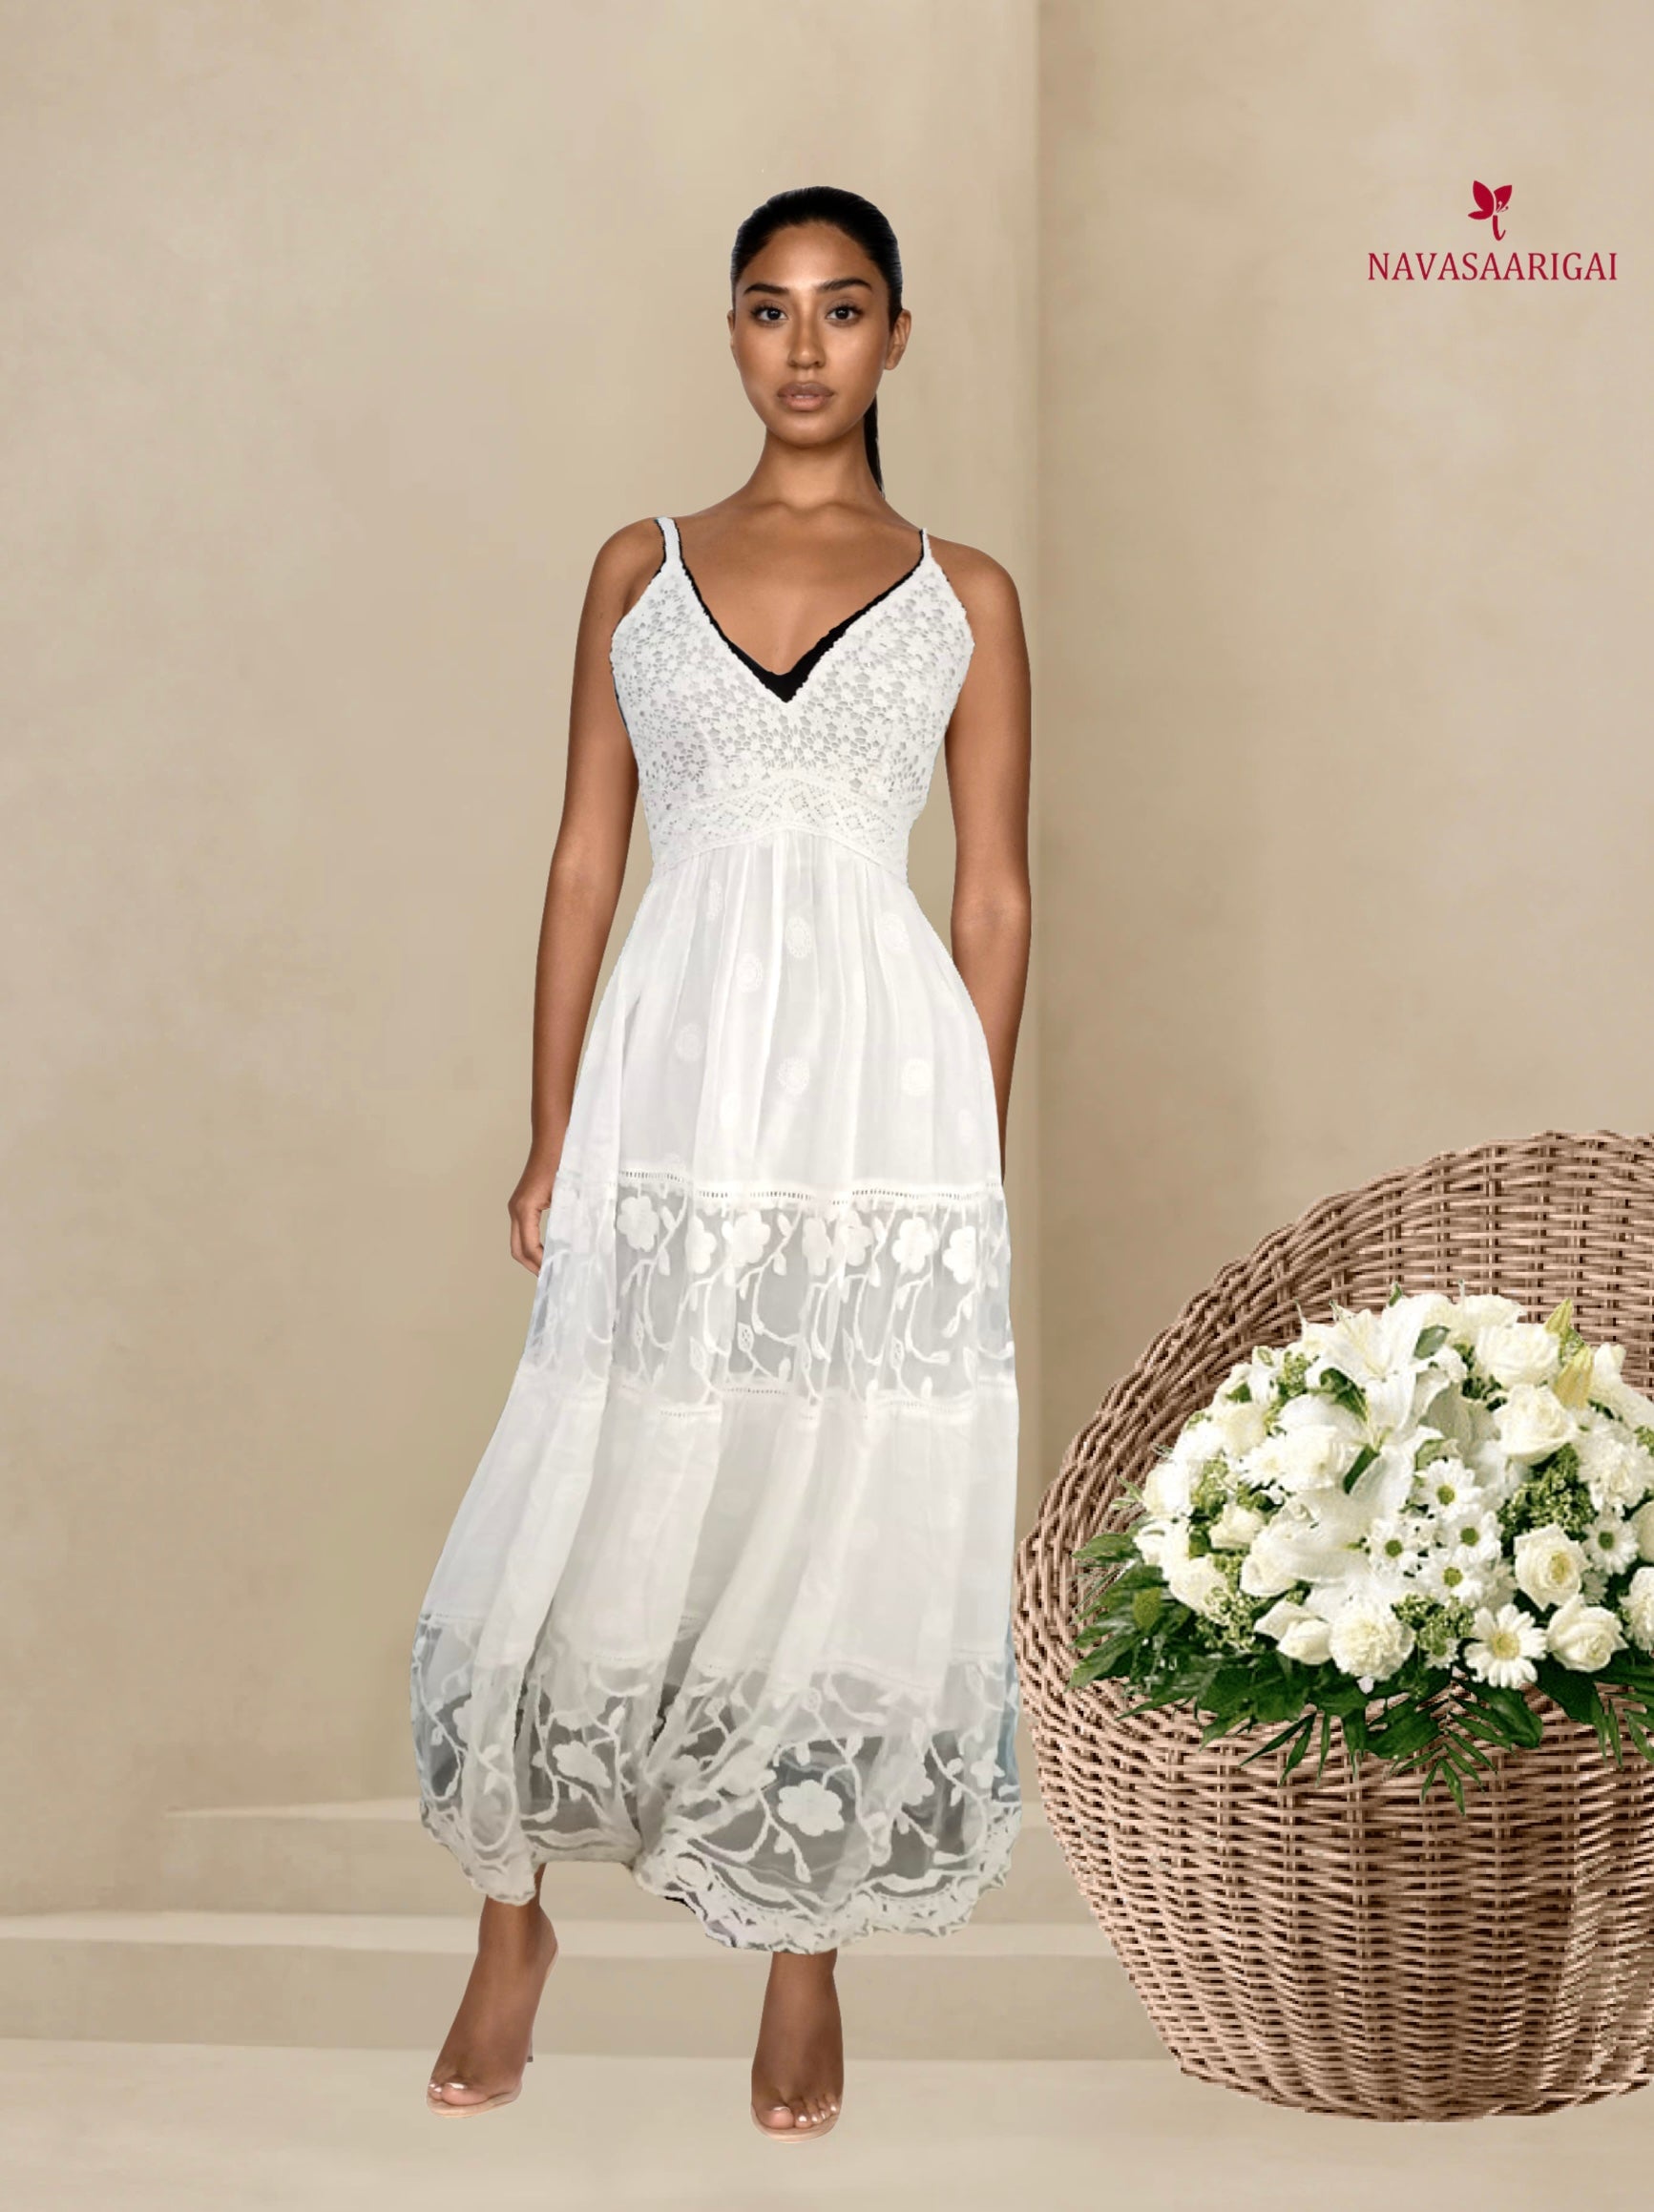 NW1373 - White Cotton Dress– NEO NYC, INC.